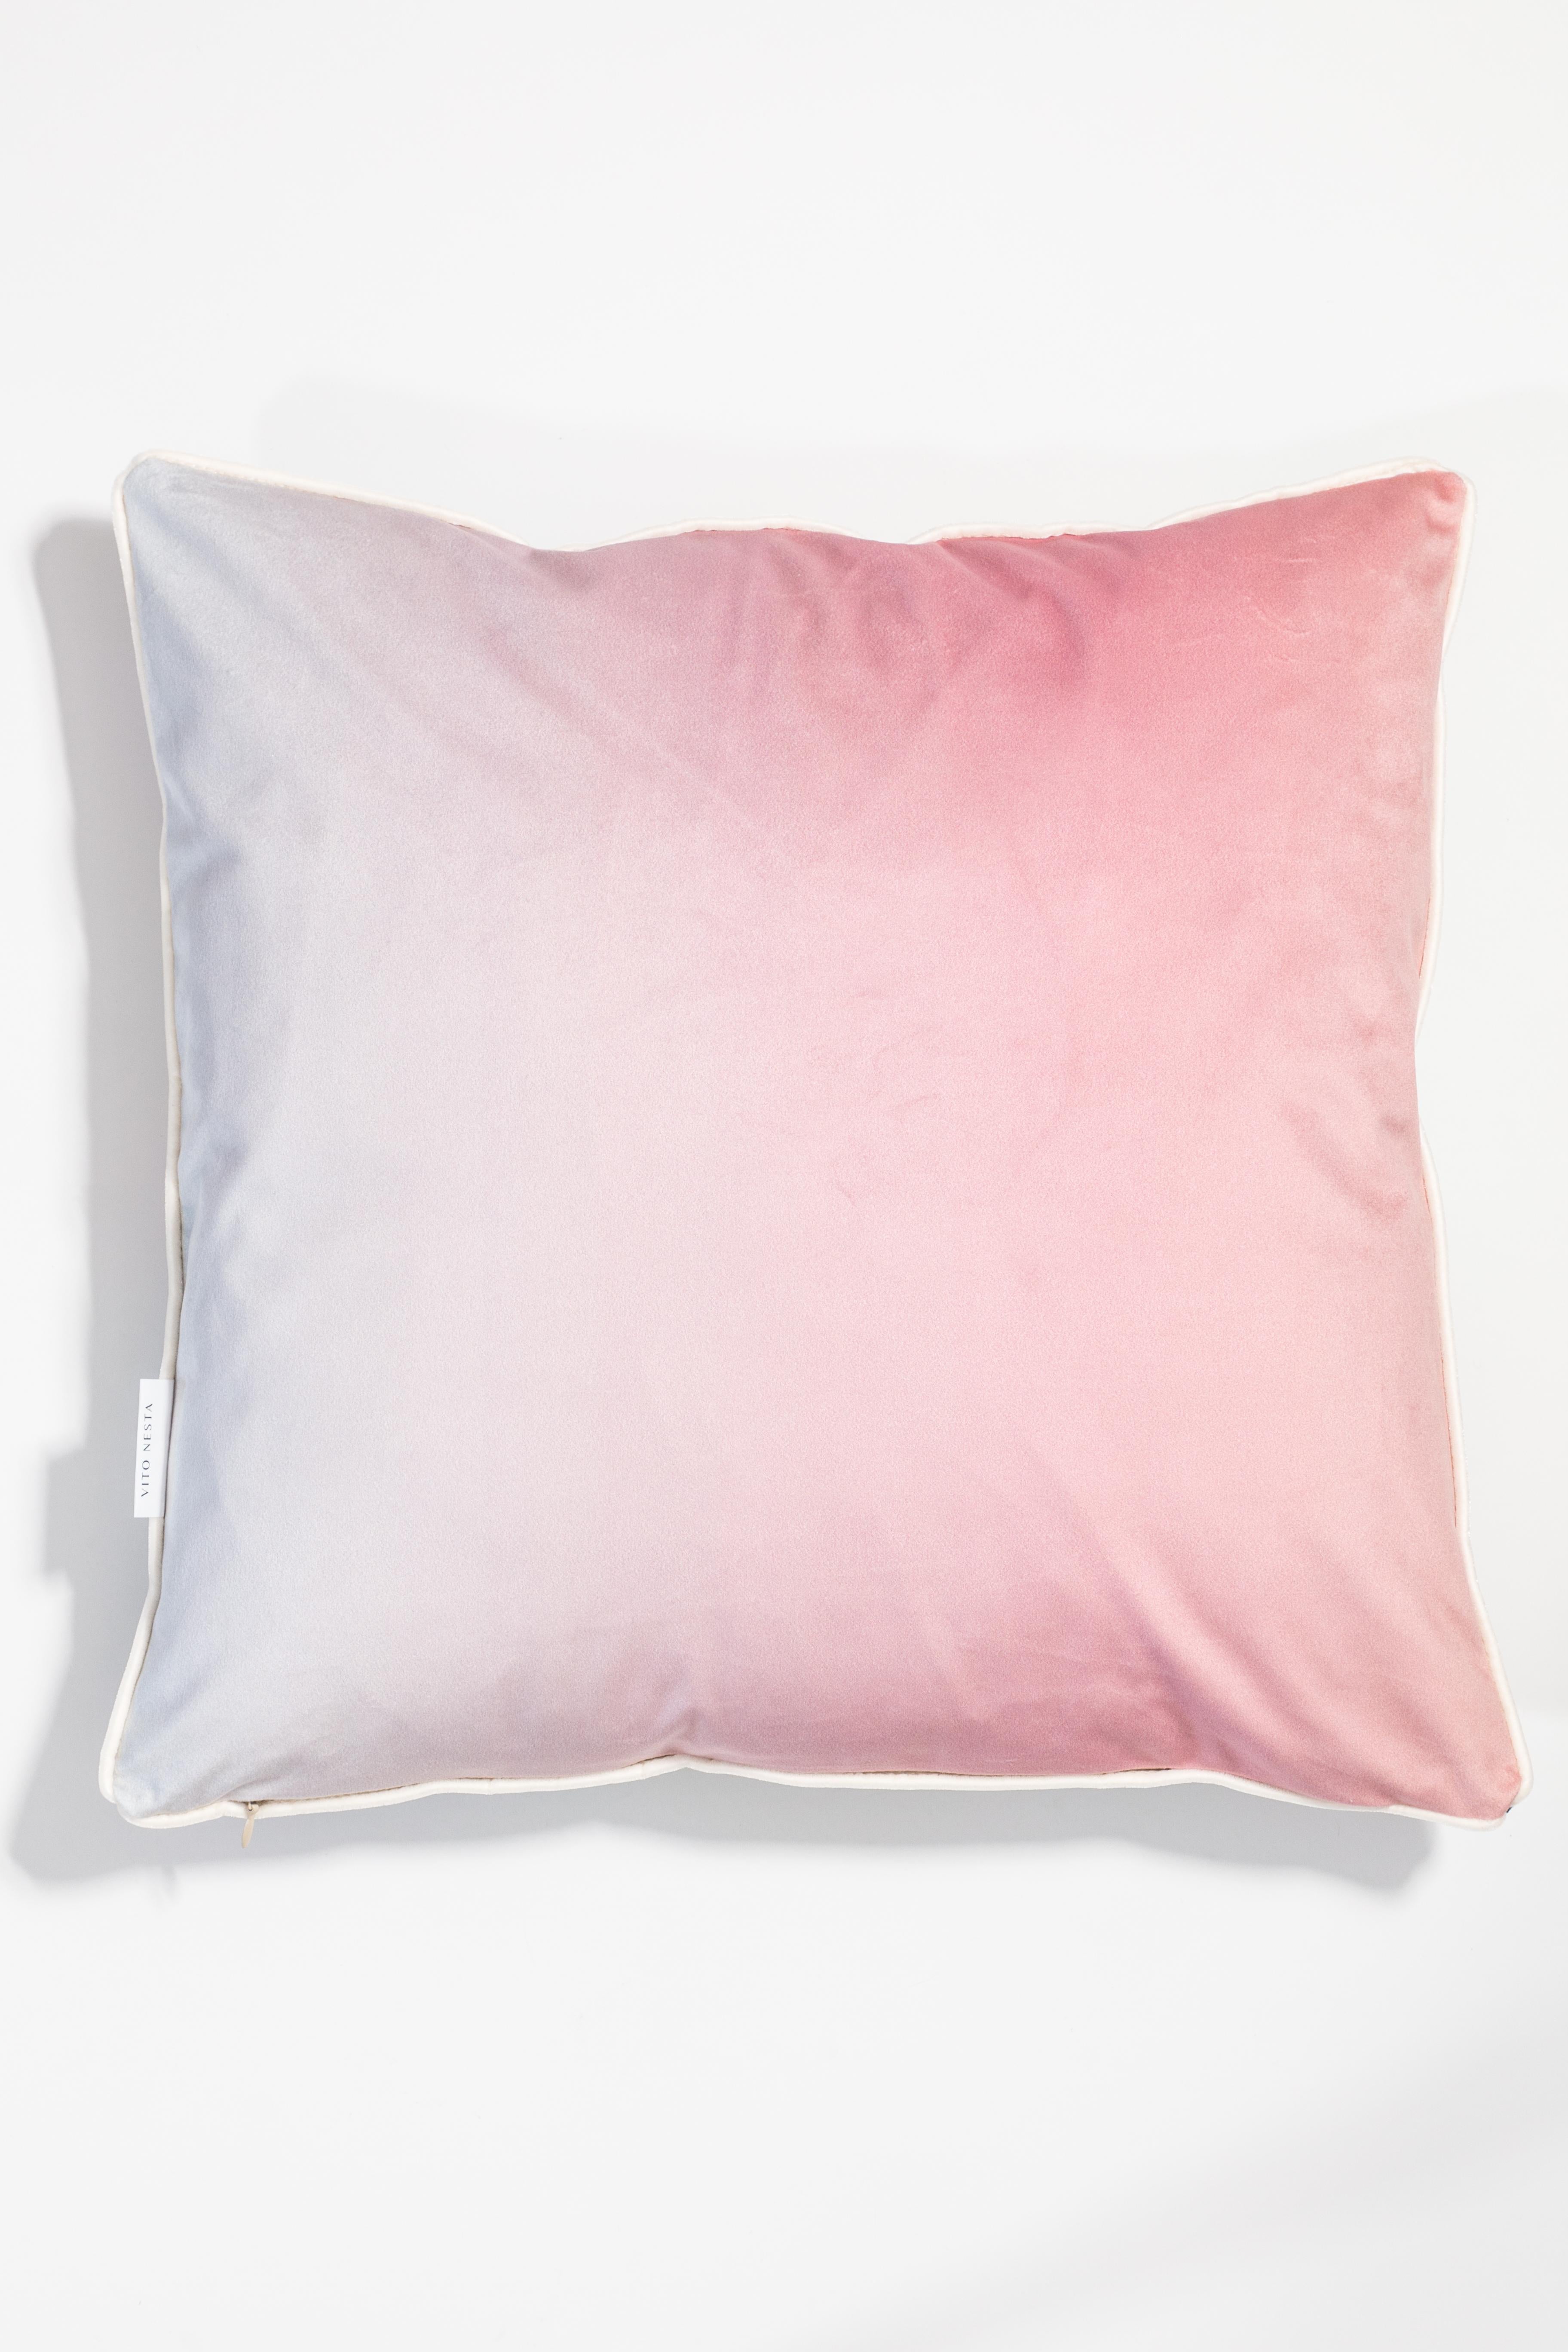 Cairo, Contemporary Velvet Printed Pillow by Vito Nesta For Sale 6